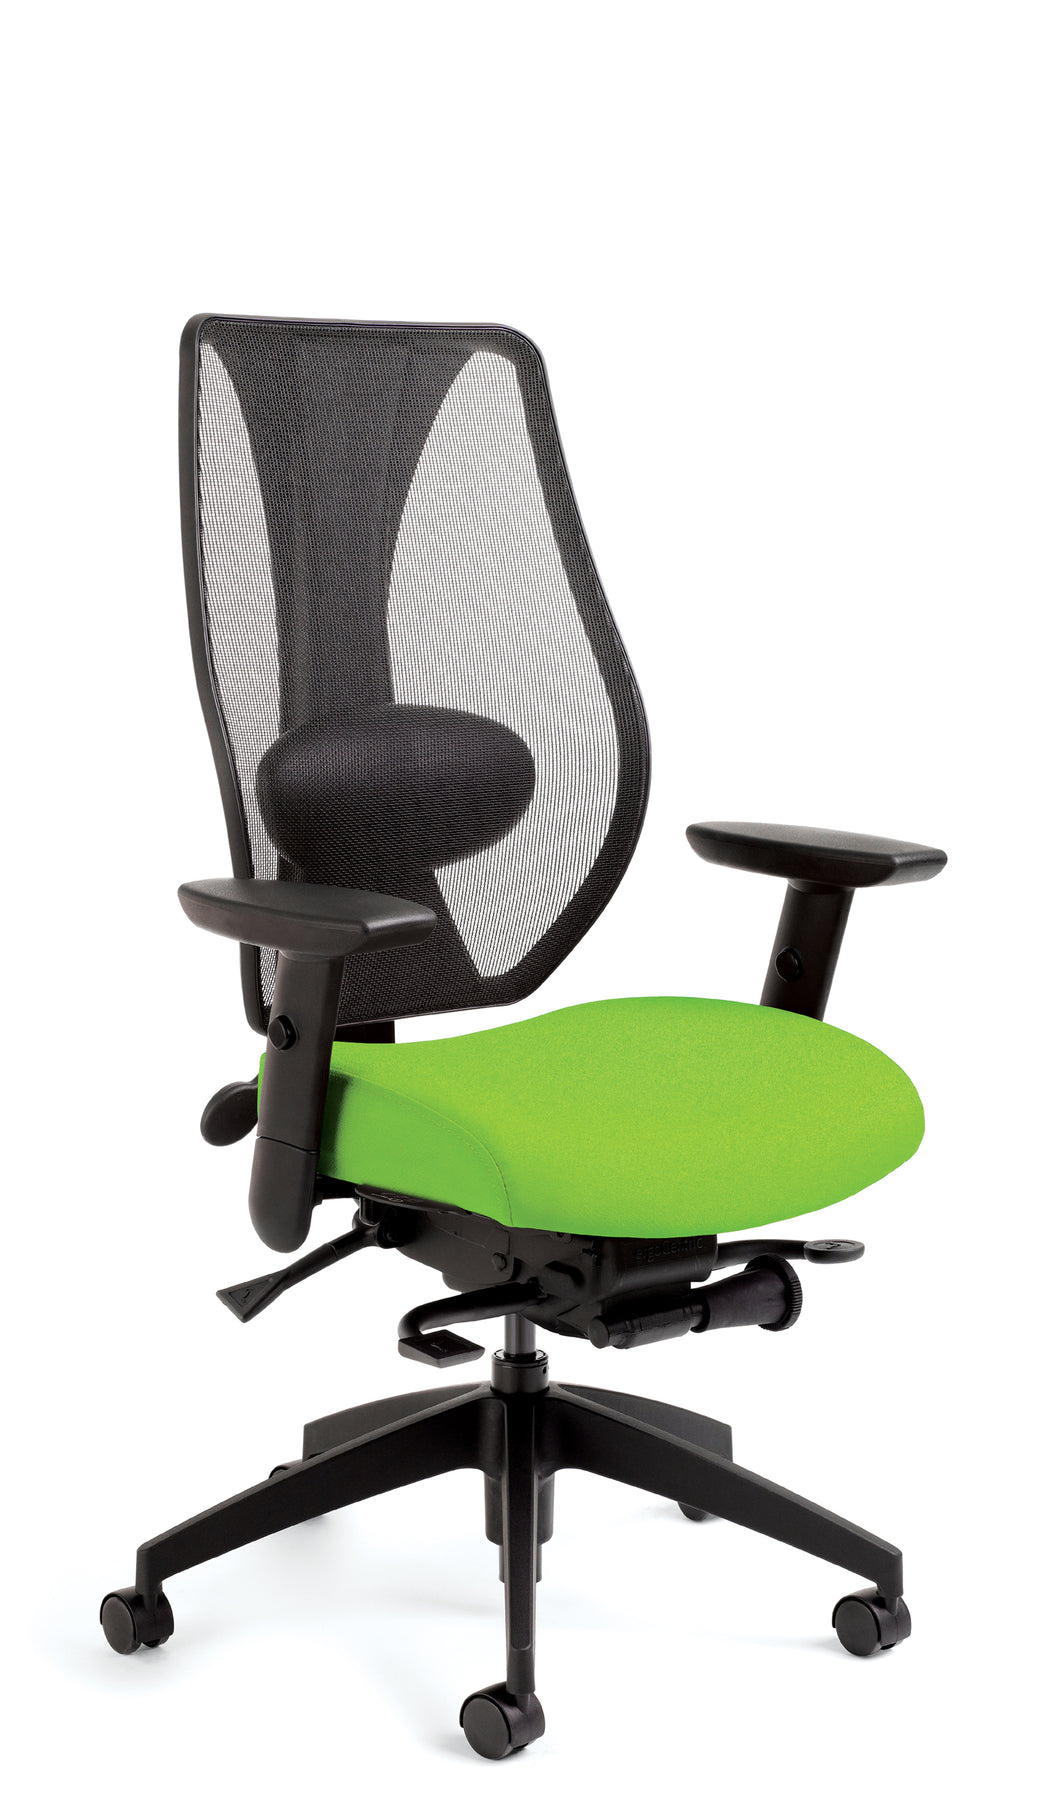 TCentric Hybrid ergonomic chair